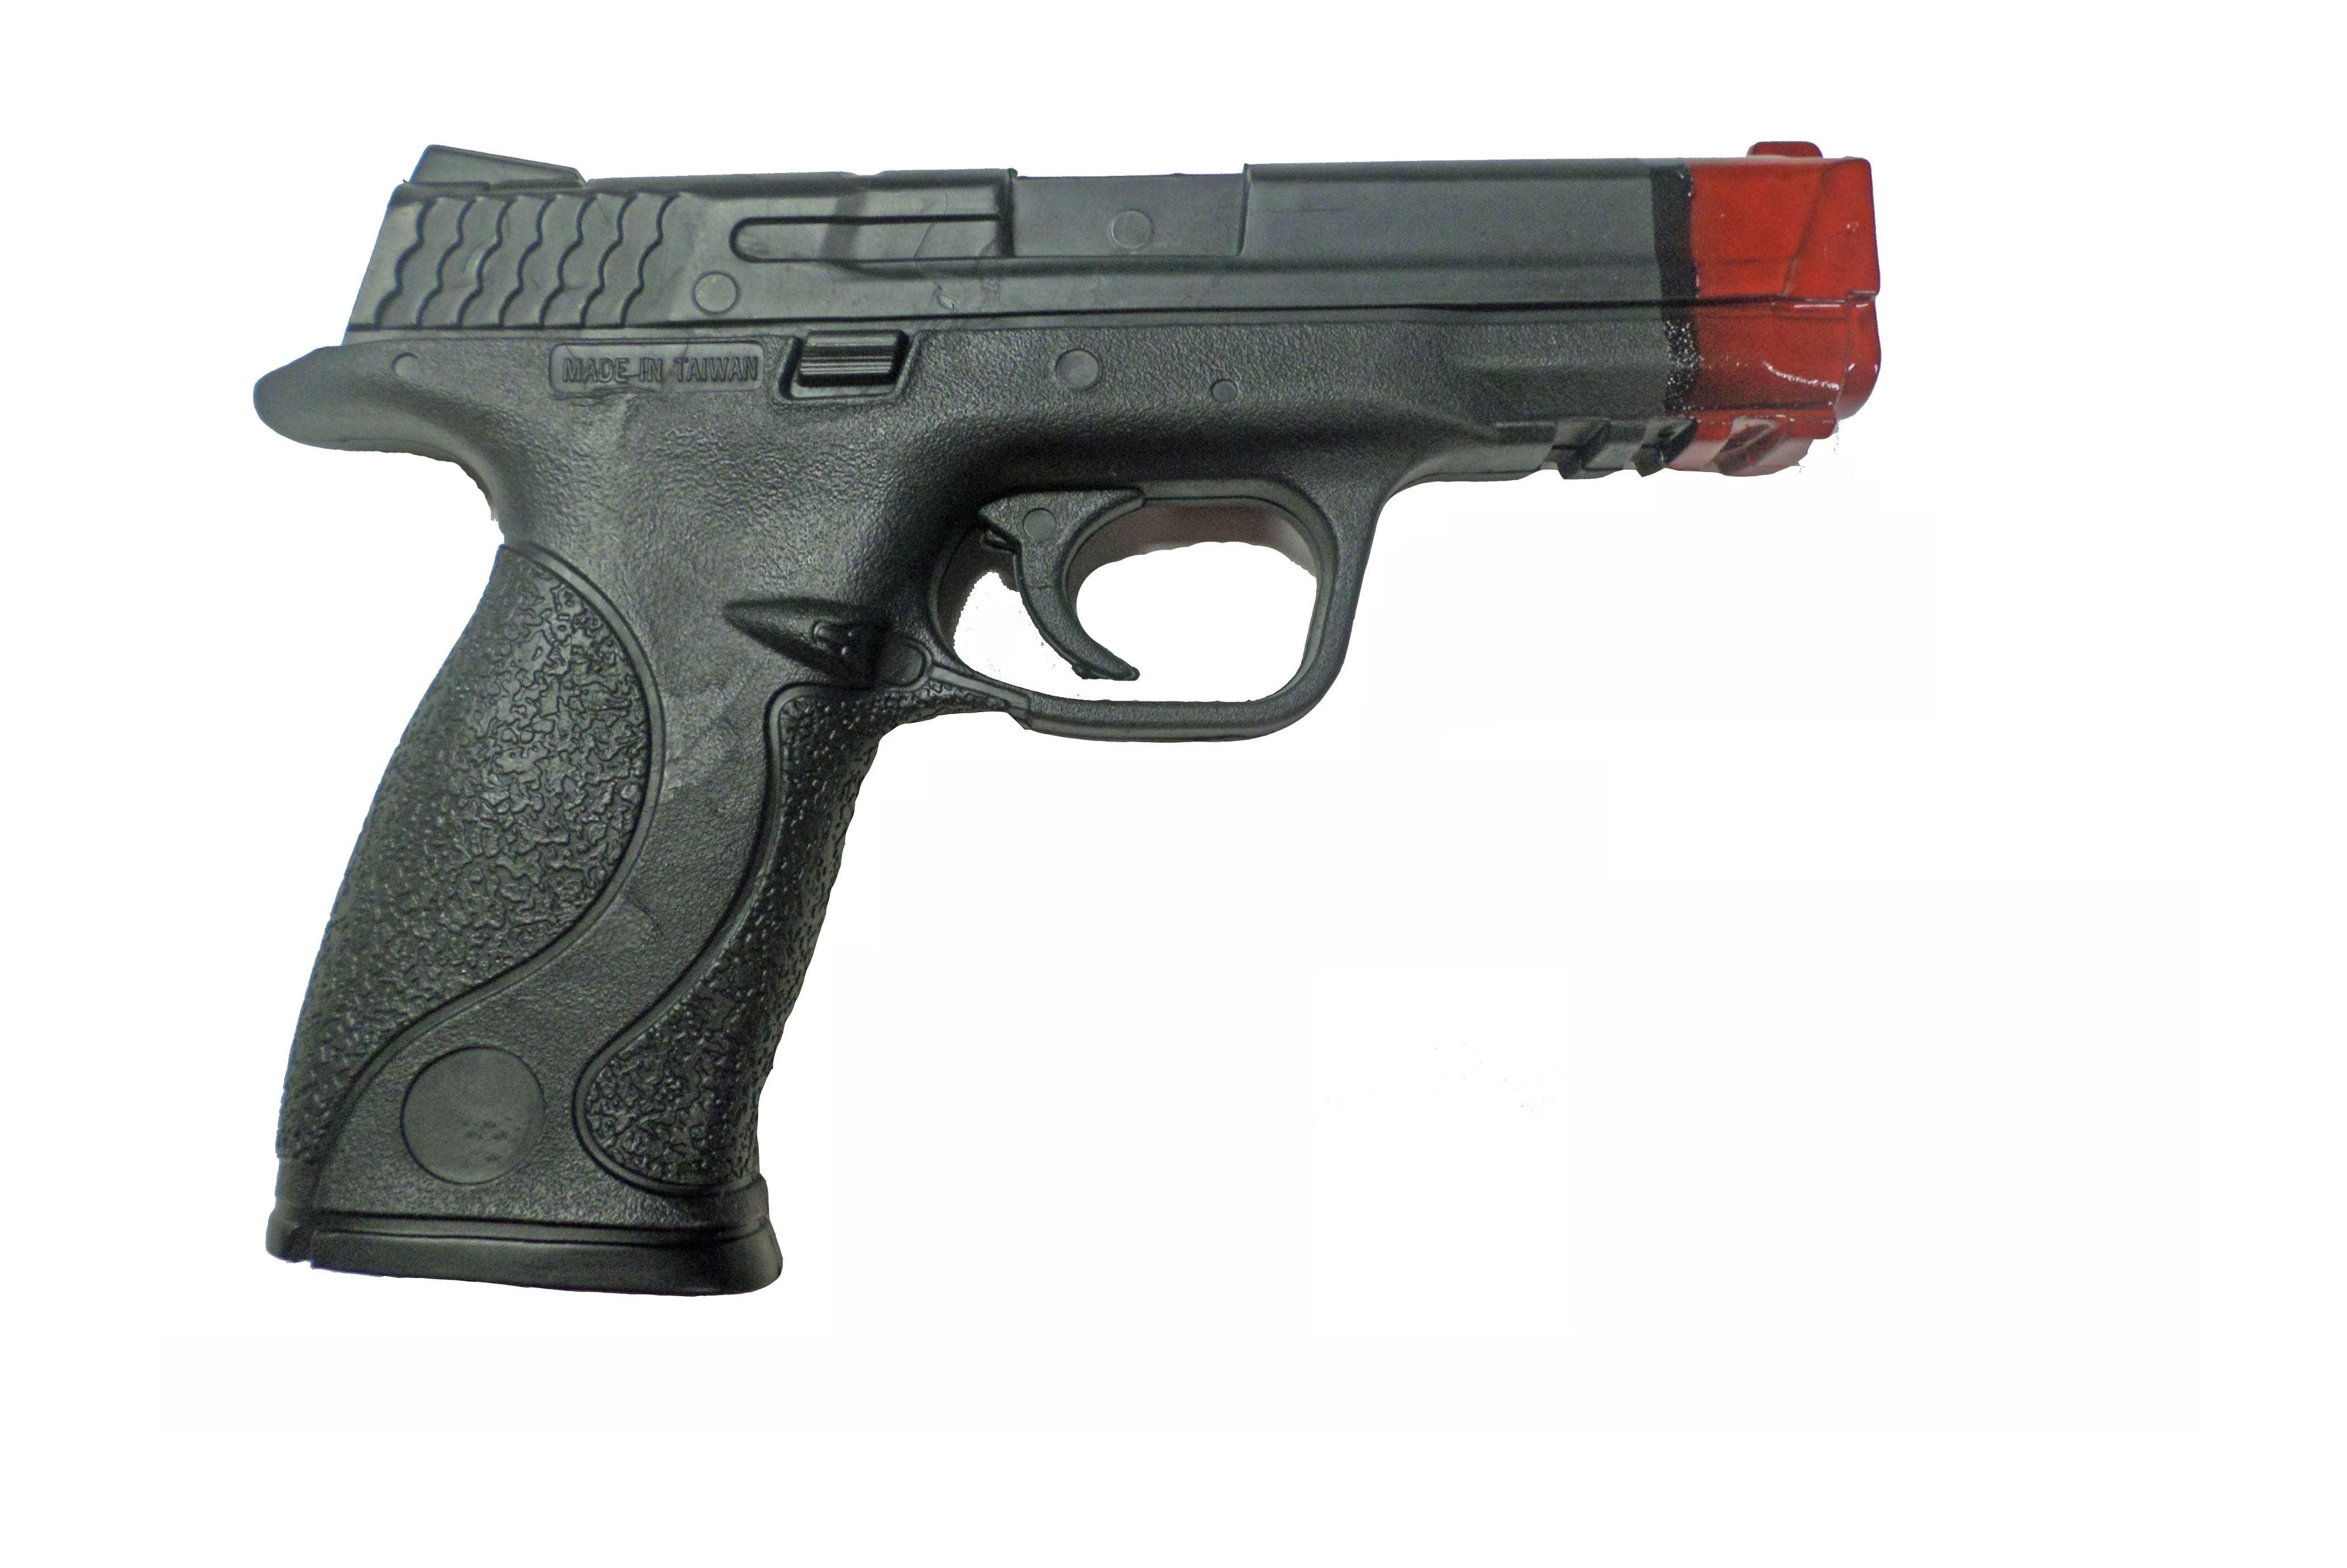 Kunststoff-Pistole schwarz, Mündung rot